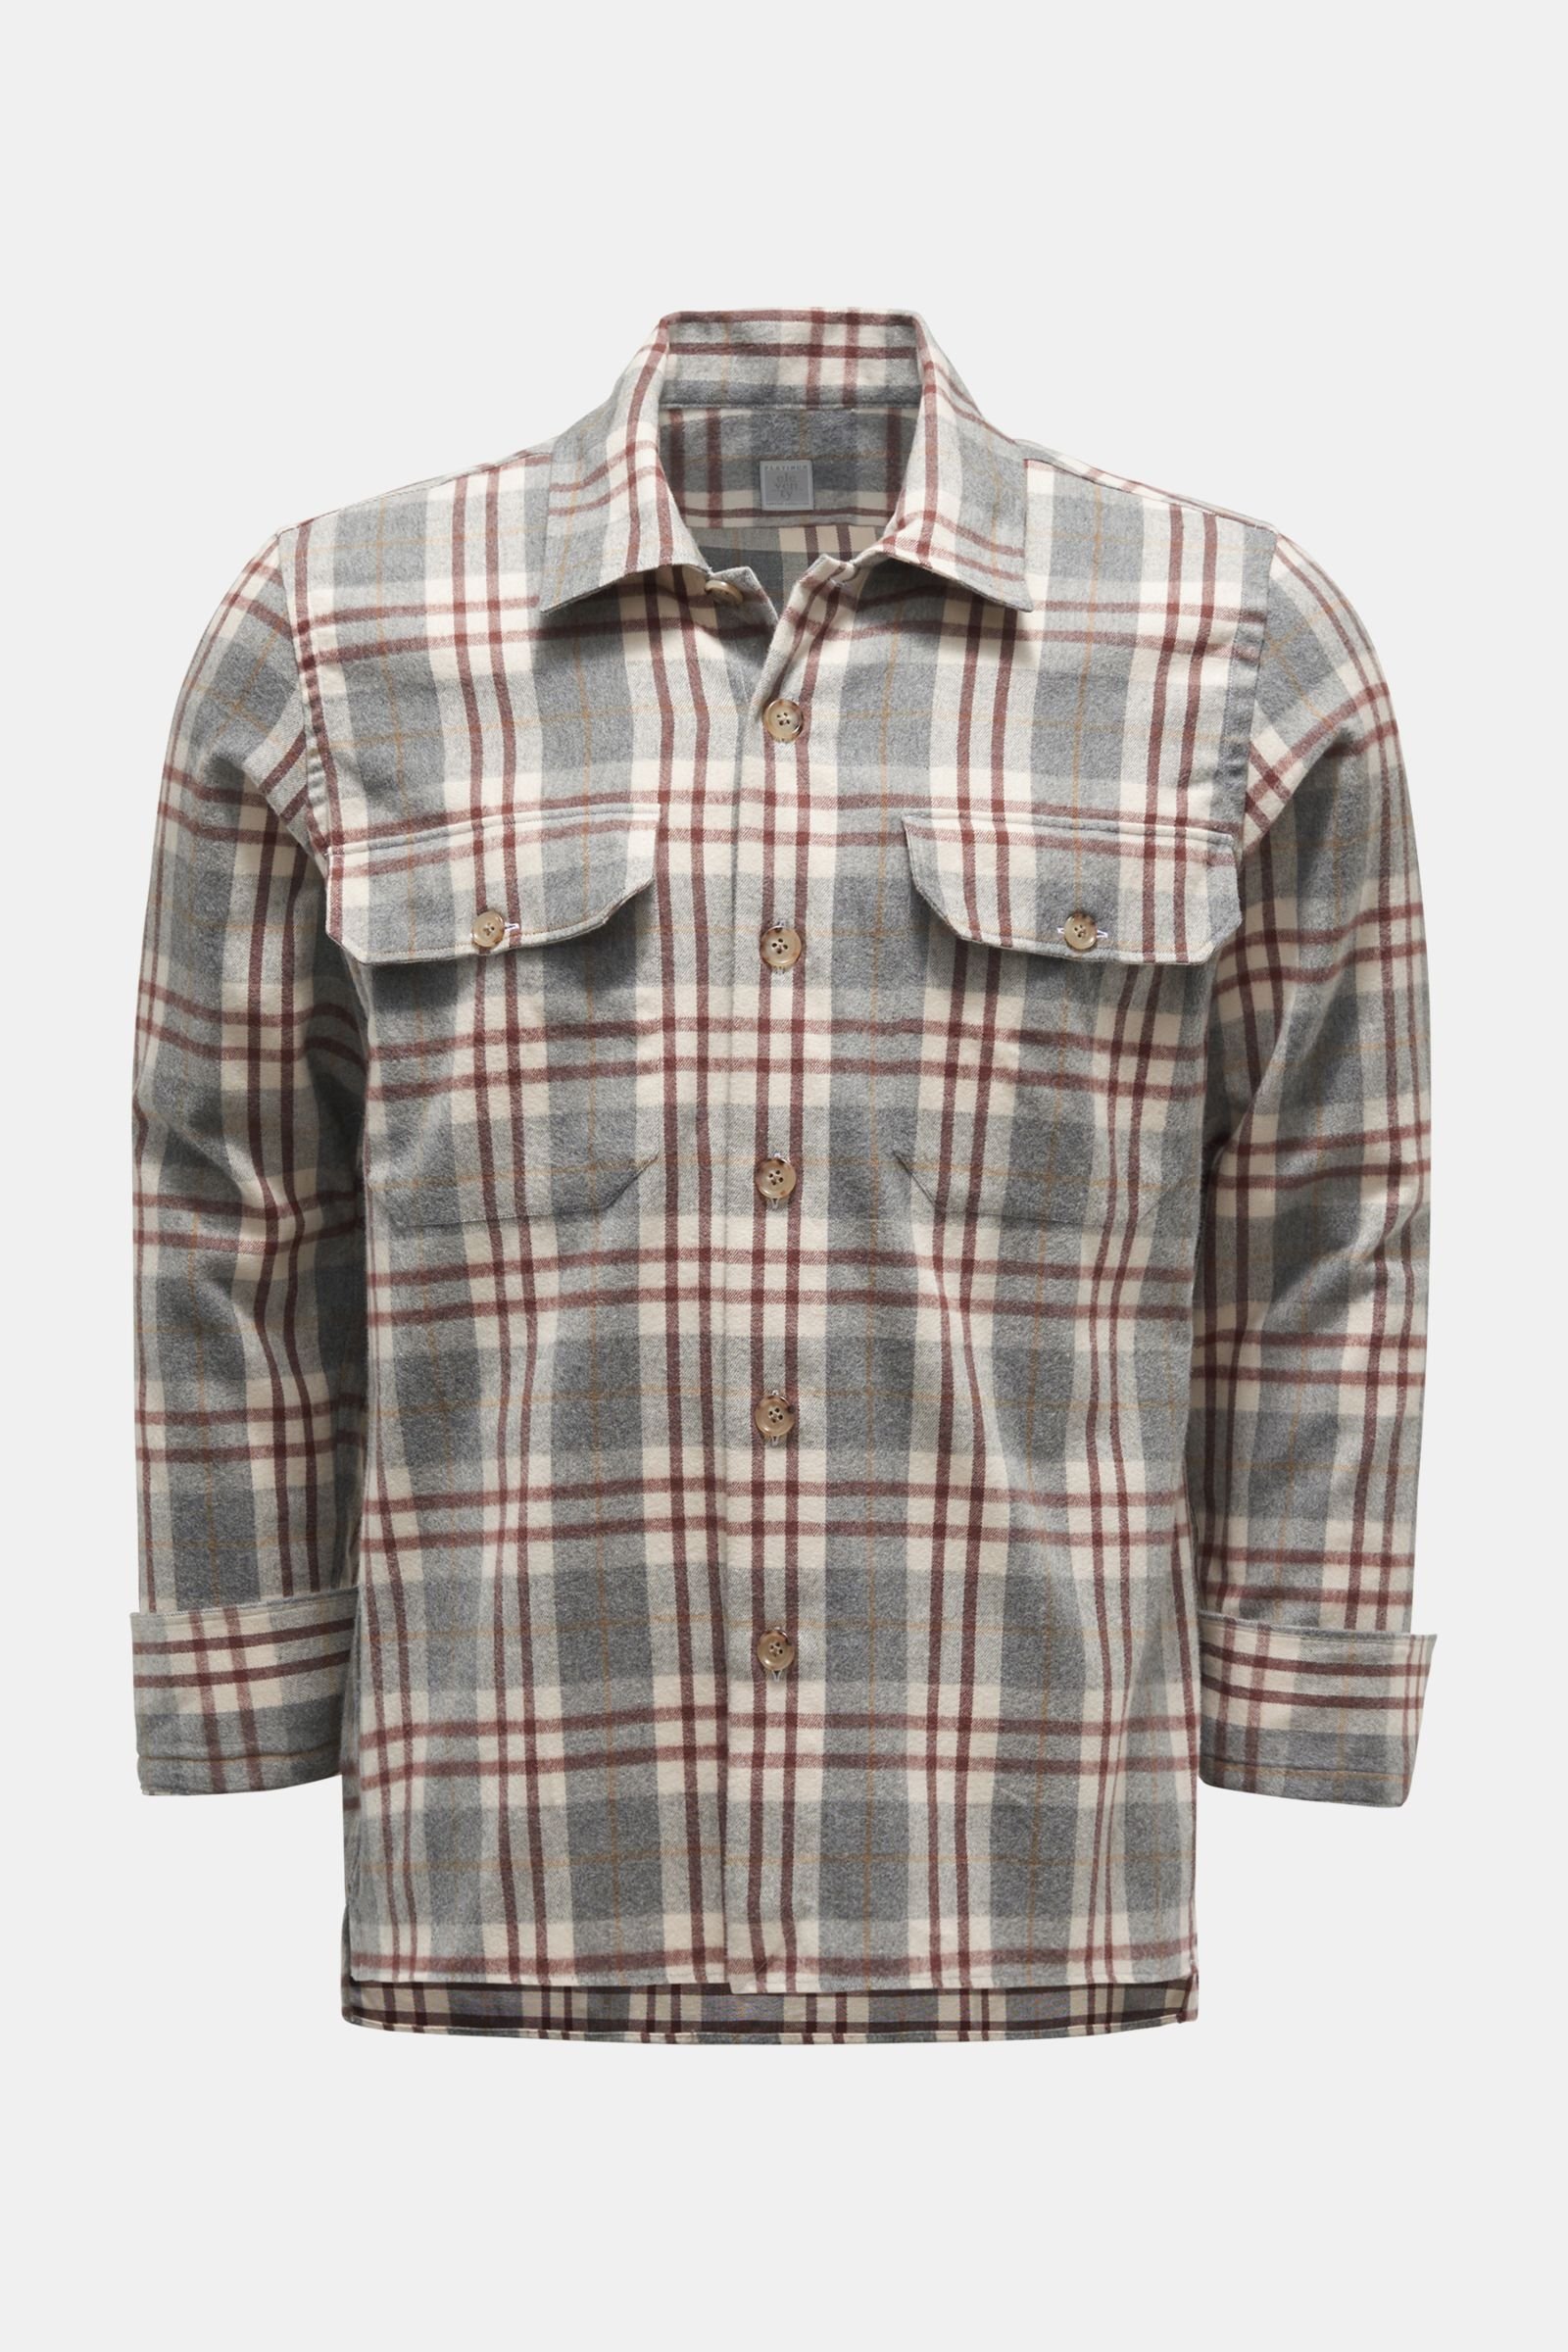 Flannel shirt slim collar grey/cream/red brown checked